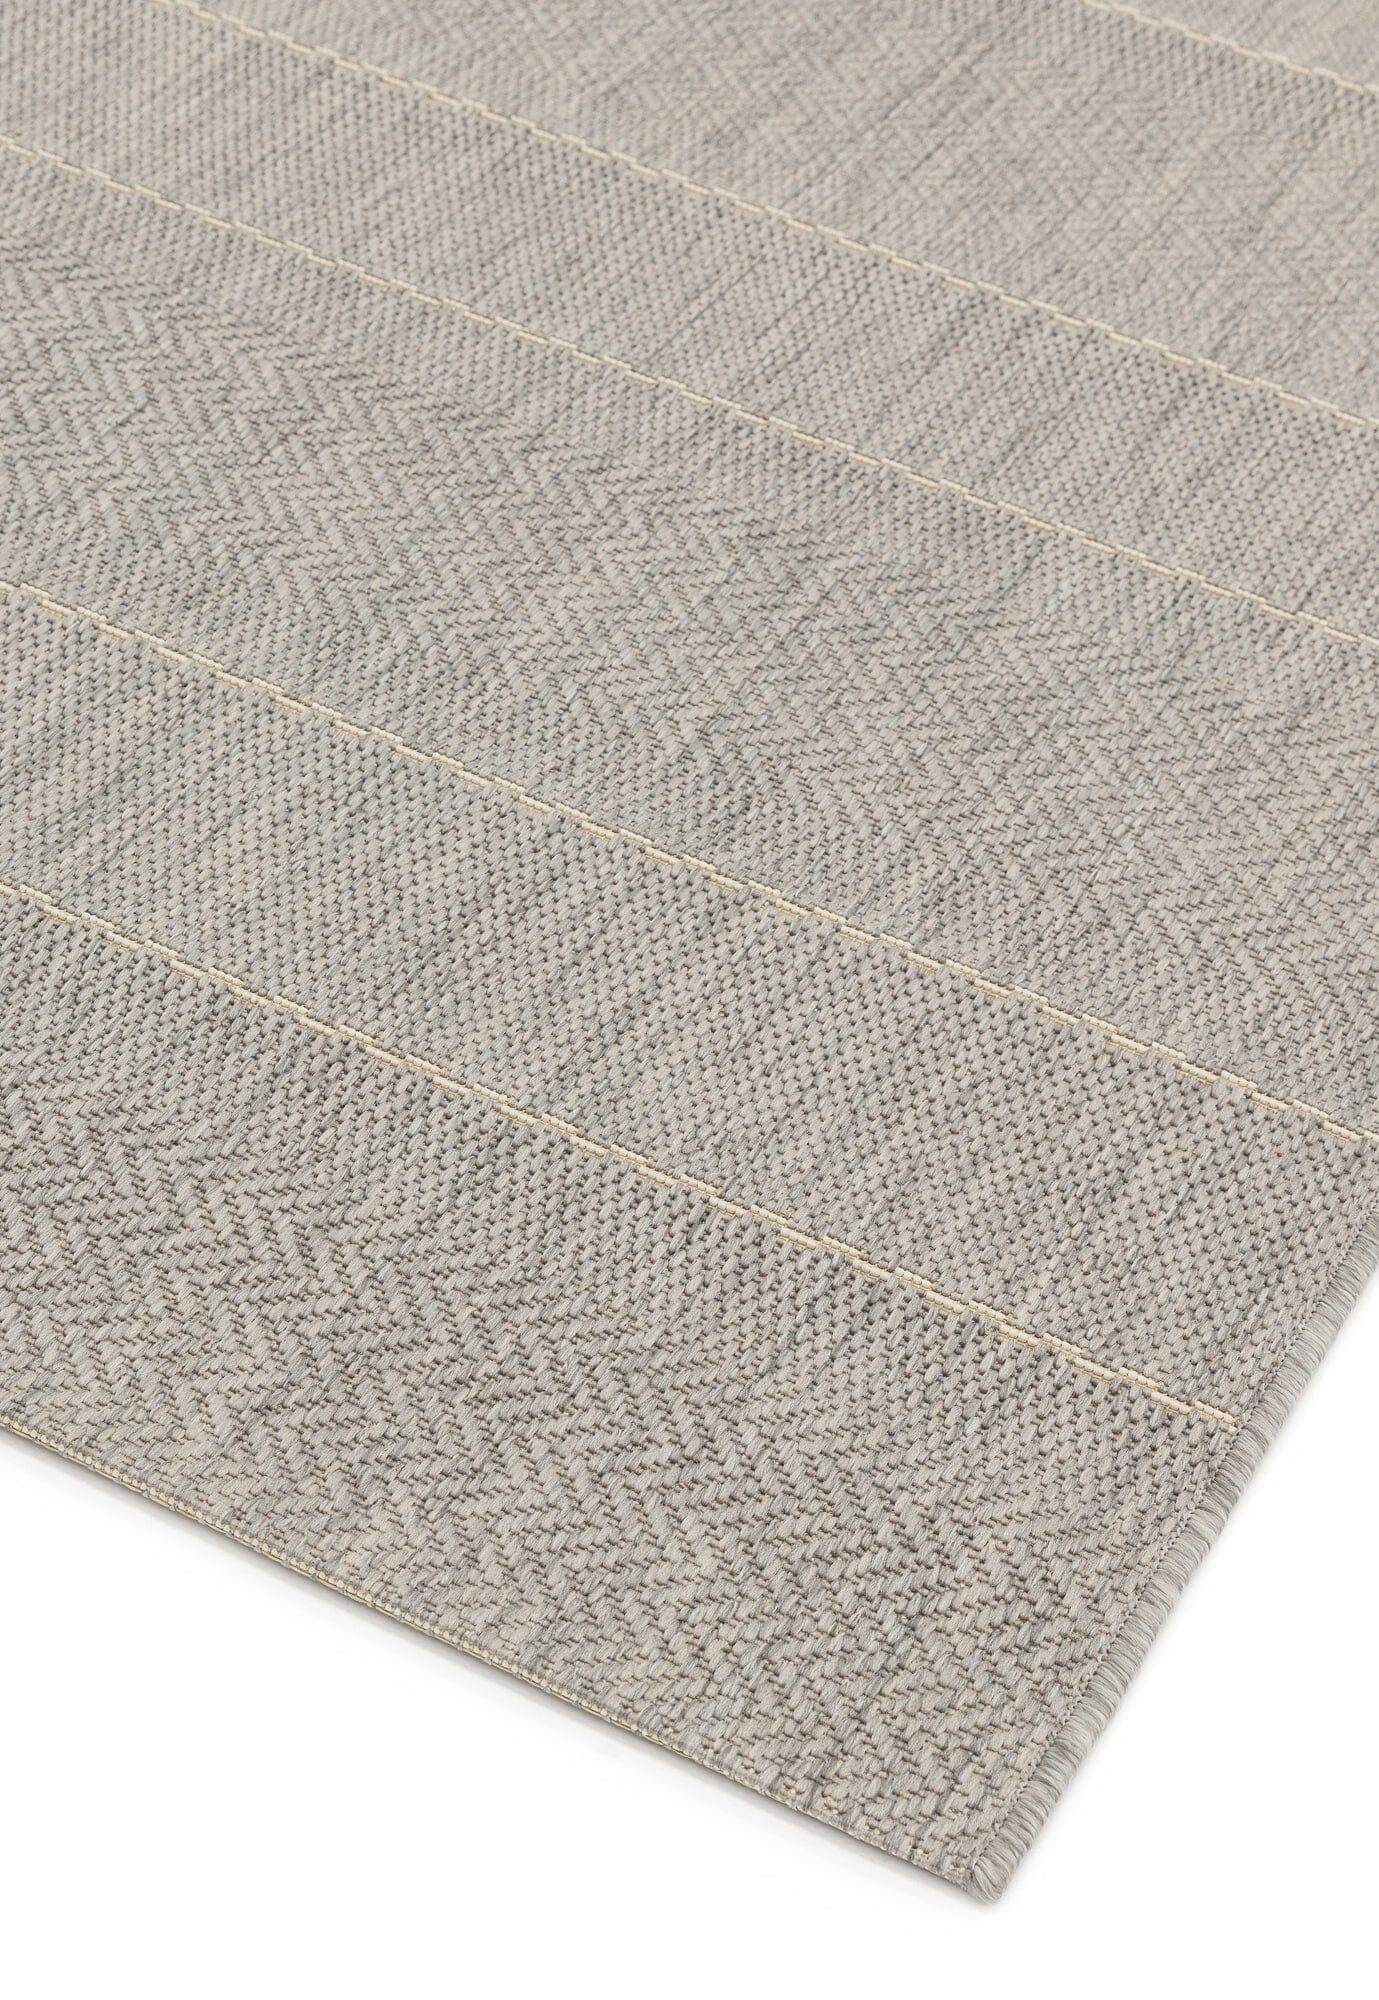 Asiatic Carpets Patio Machine Woven Rug Beige Stripe - 160 x 230cm